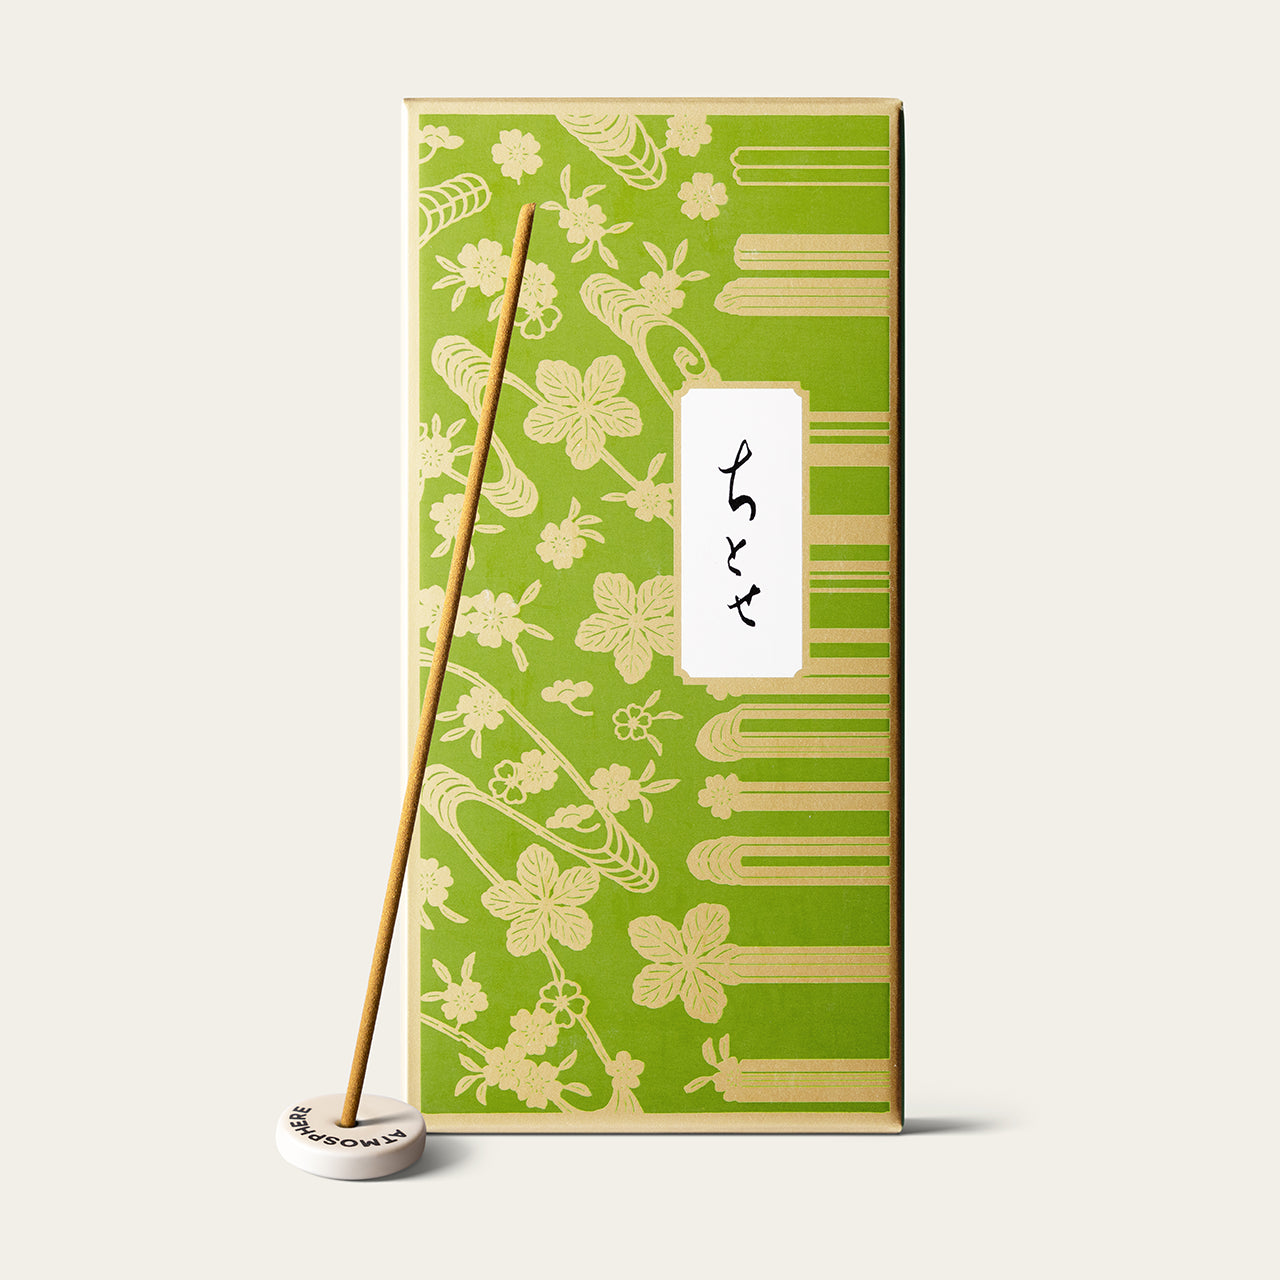 Kyukyodo Premium Thousand Years Chitose Japanese incense sticks (200 sticks) with Atmosphere ceramic incense holder